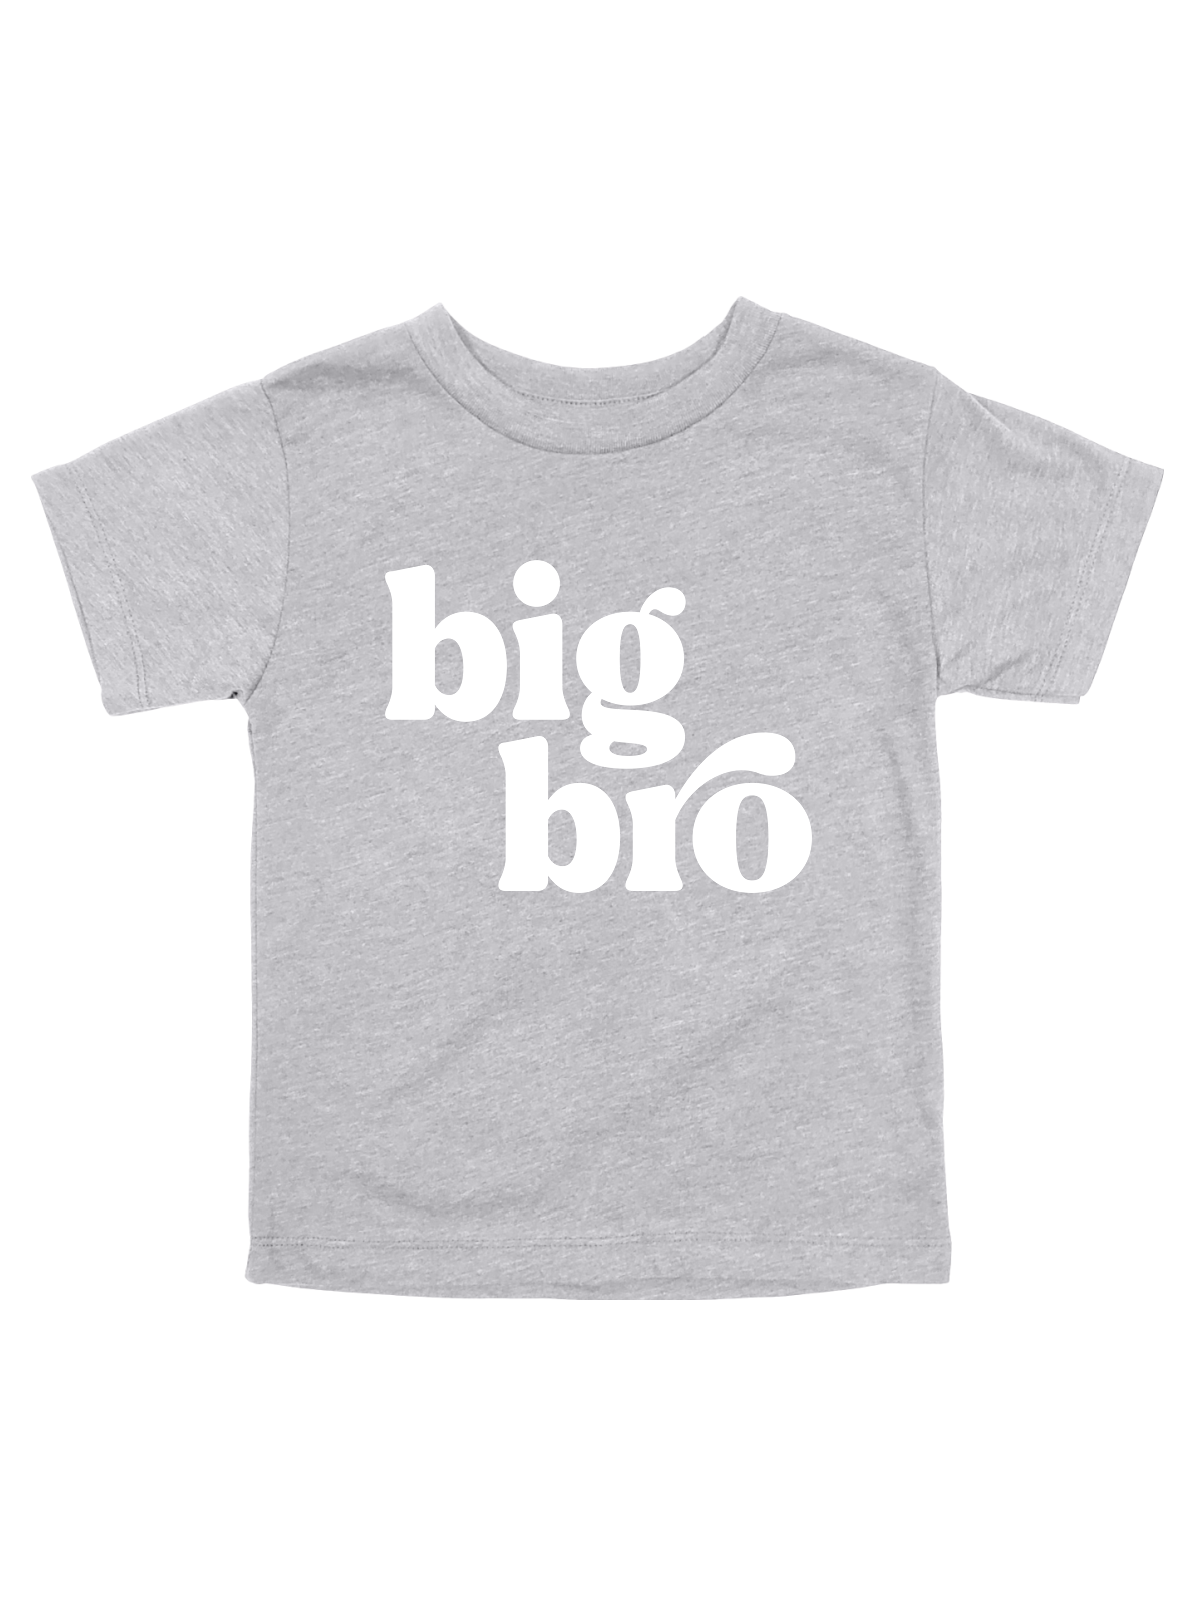 Big Bro Shirt for Boys in Heather Gray